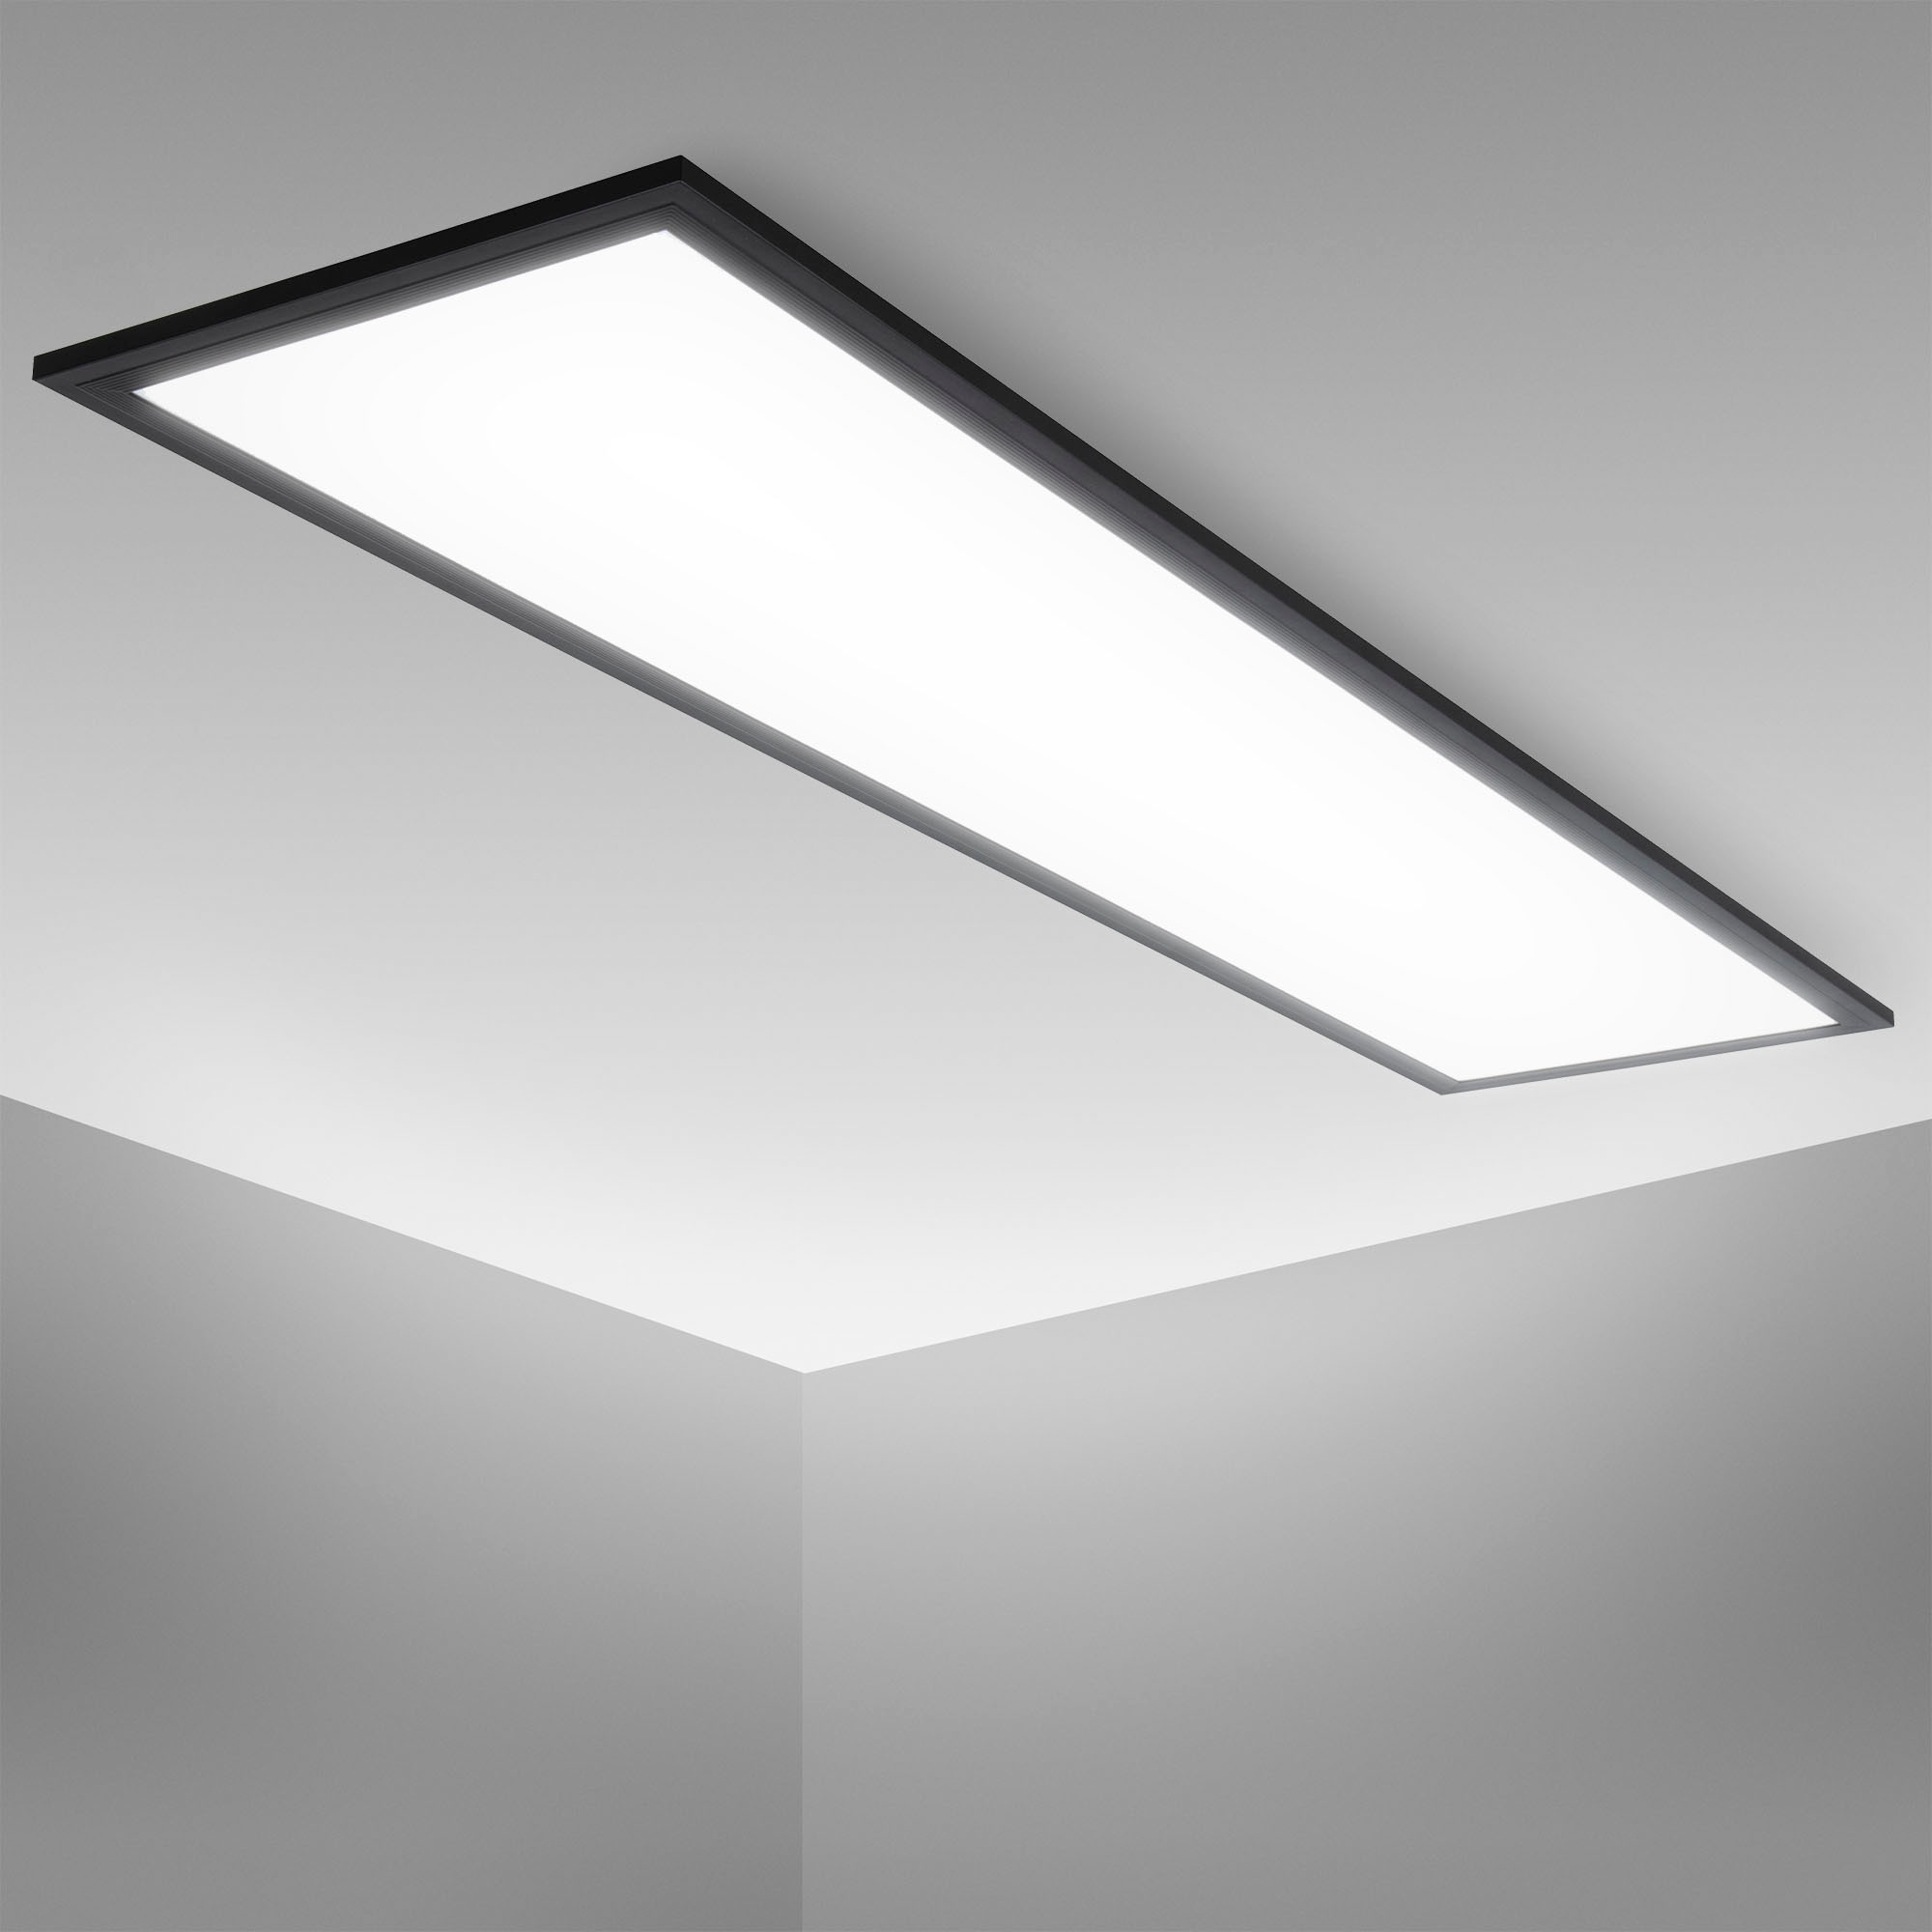 B.K.Licht LED Leuchten-Set, 2-teilig: LED Deckenpanel + LED Stehlampe